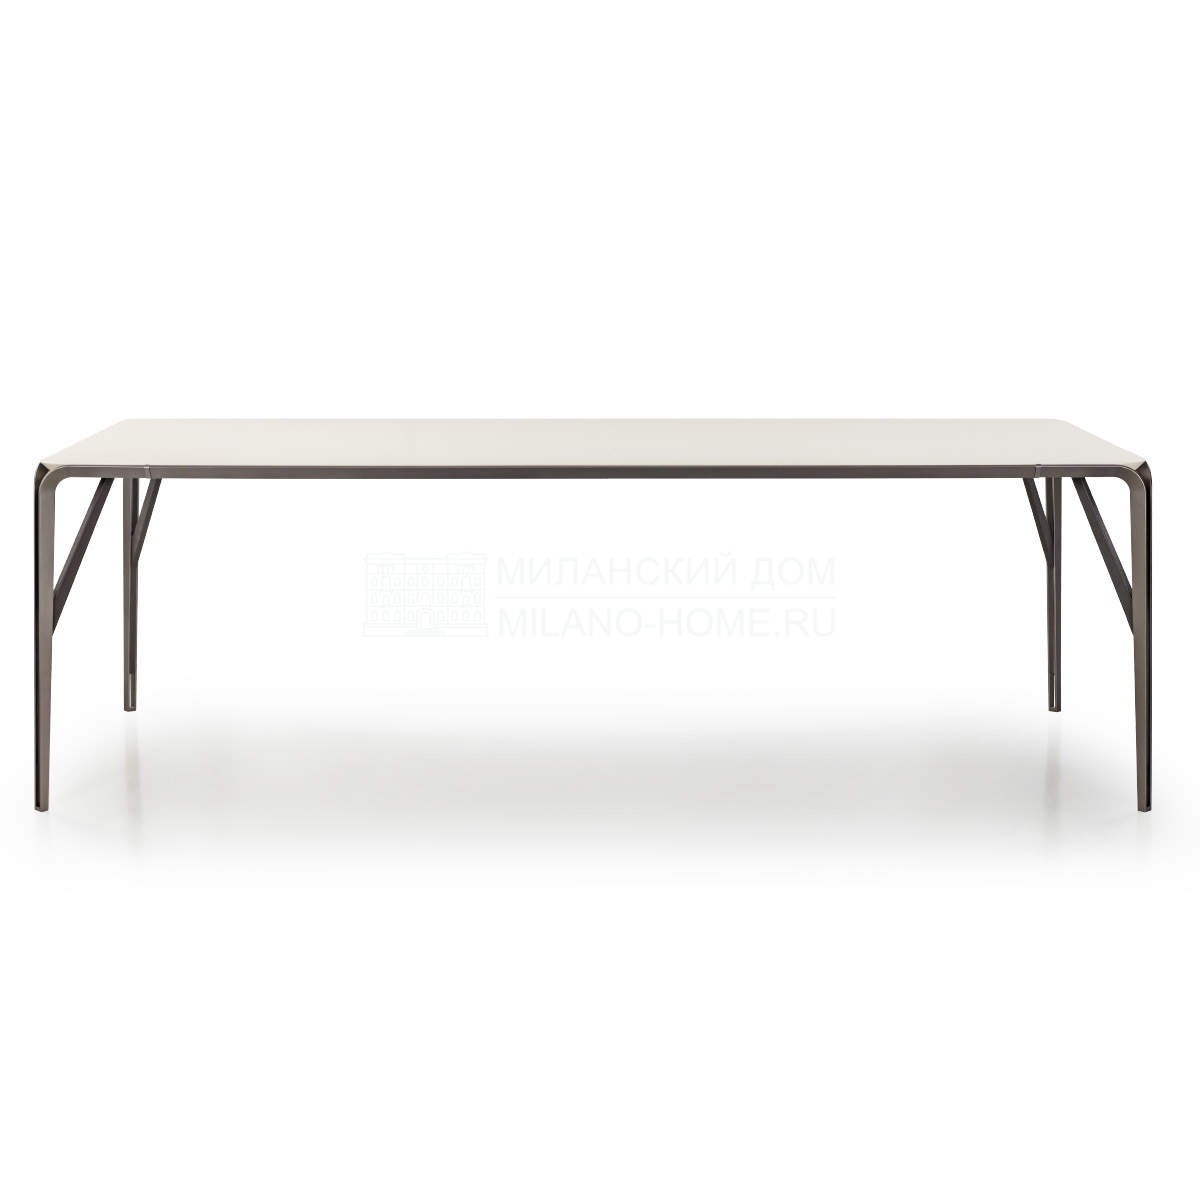 Обеденный стол Milano rectangular table из Италии фабрики TURRI